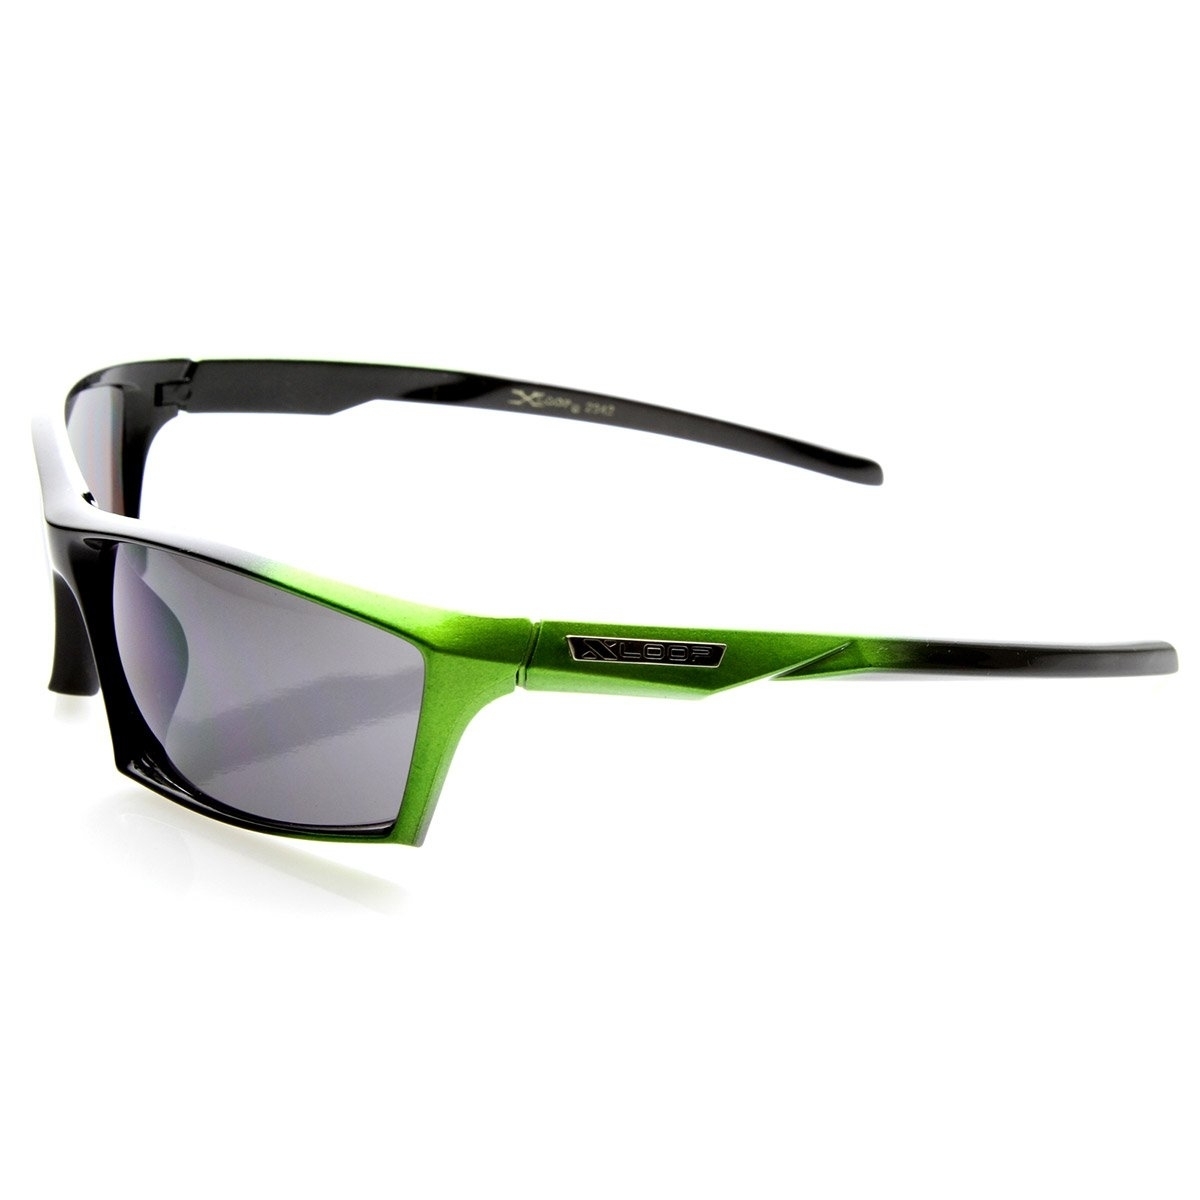 X-Loop Brand Eyewear Two-Tone Modified Square Frame XLoop Sports Sunglasses - Black-Silver